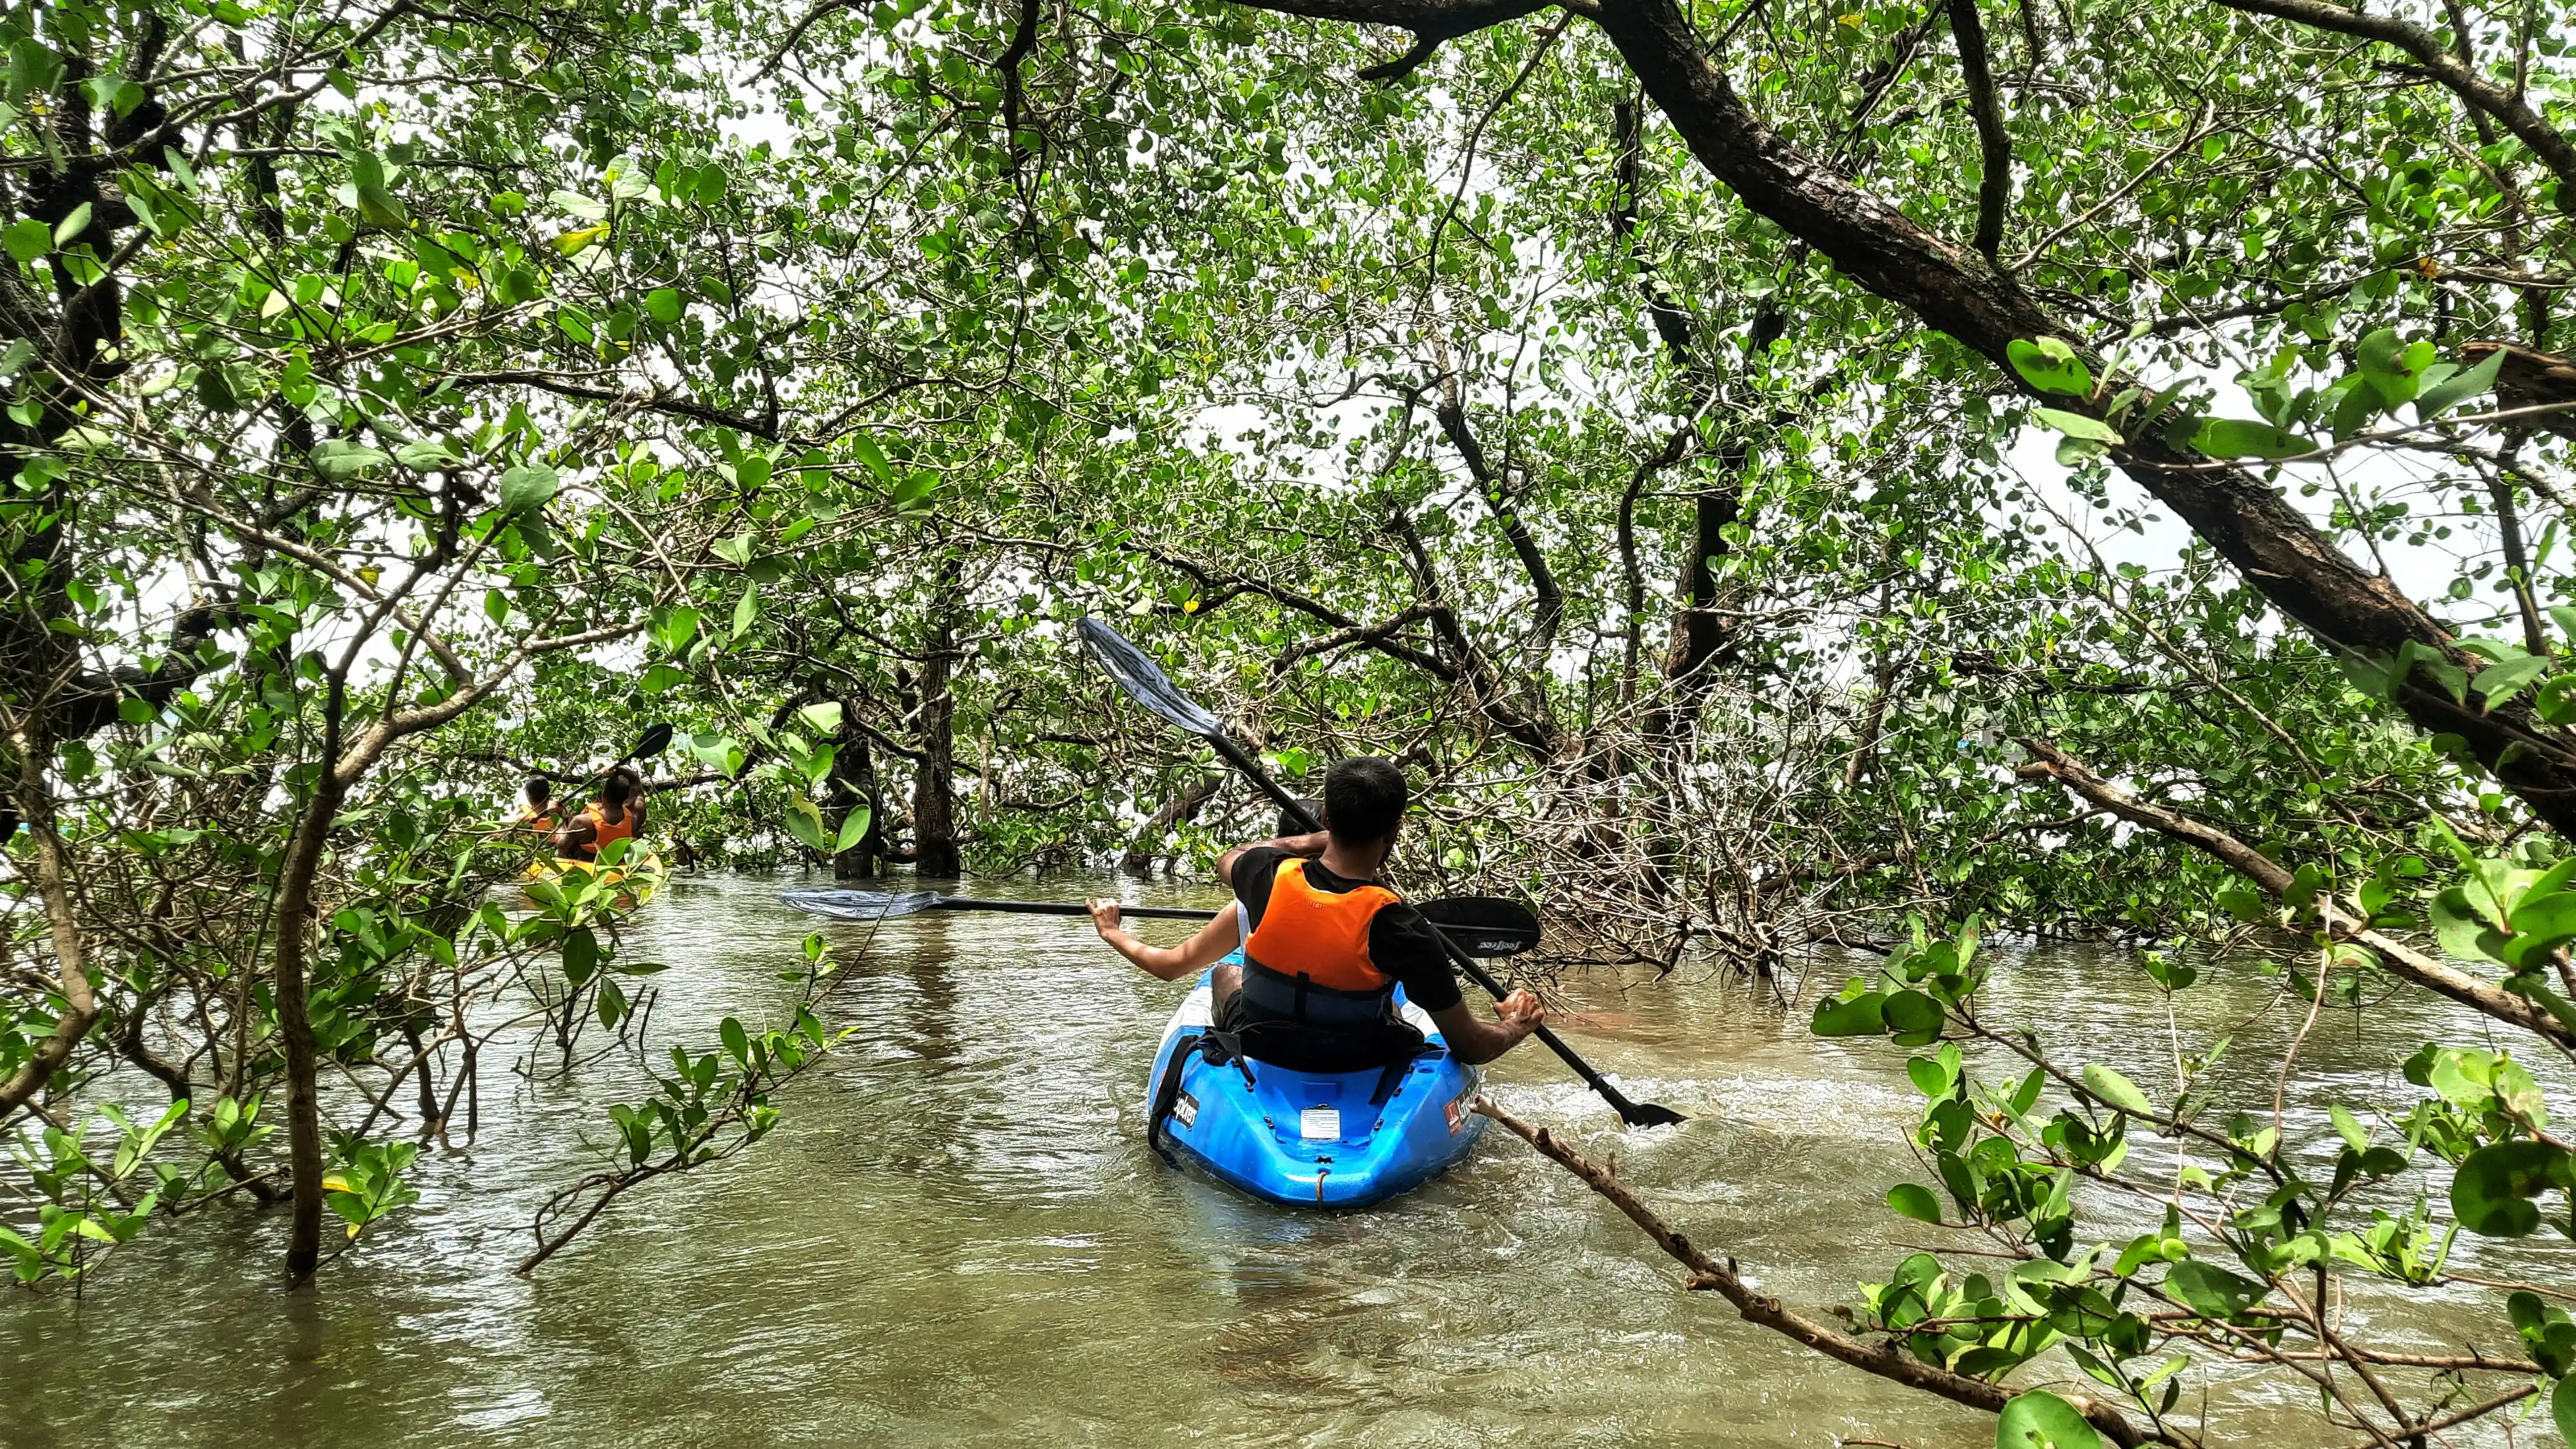 Kayaking Program by Konkan Explorers